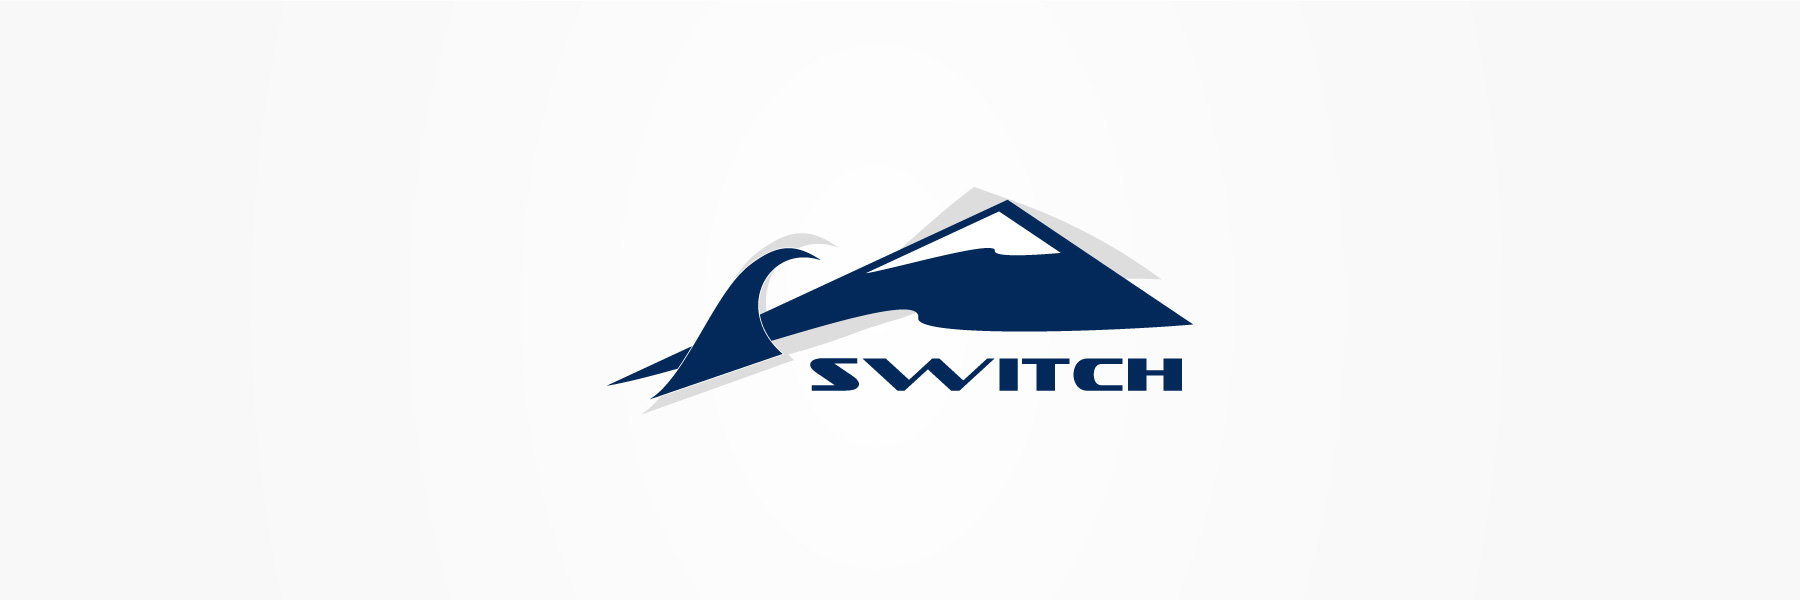 Switch-logo-design